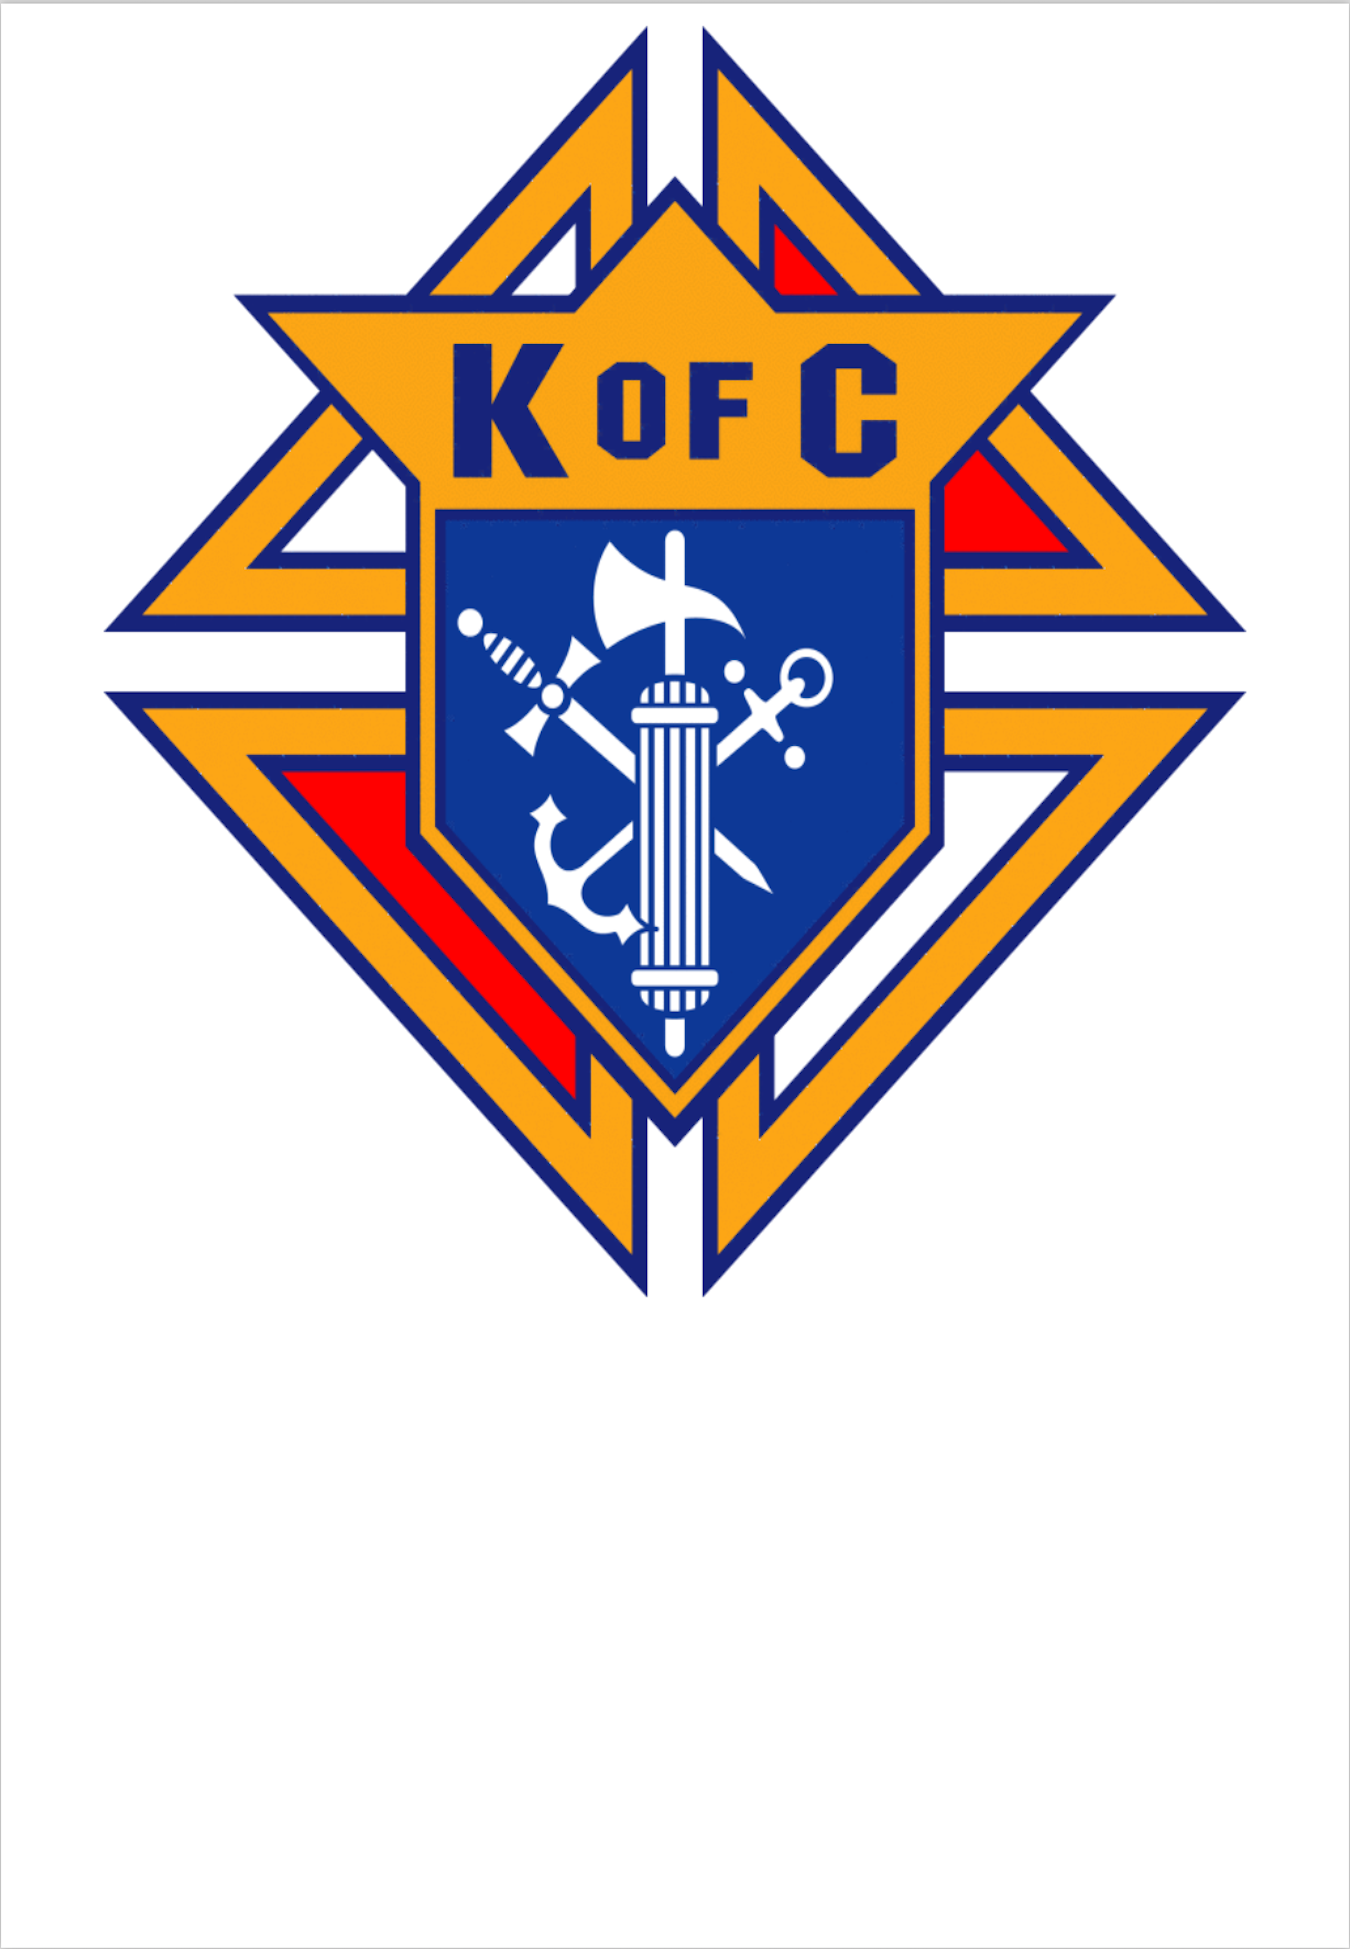 KofC logo